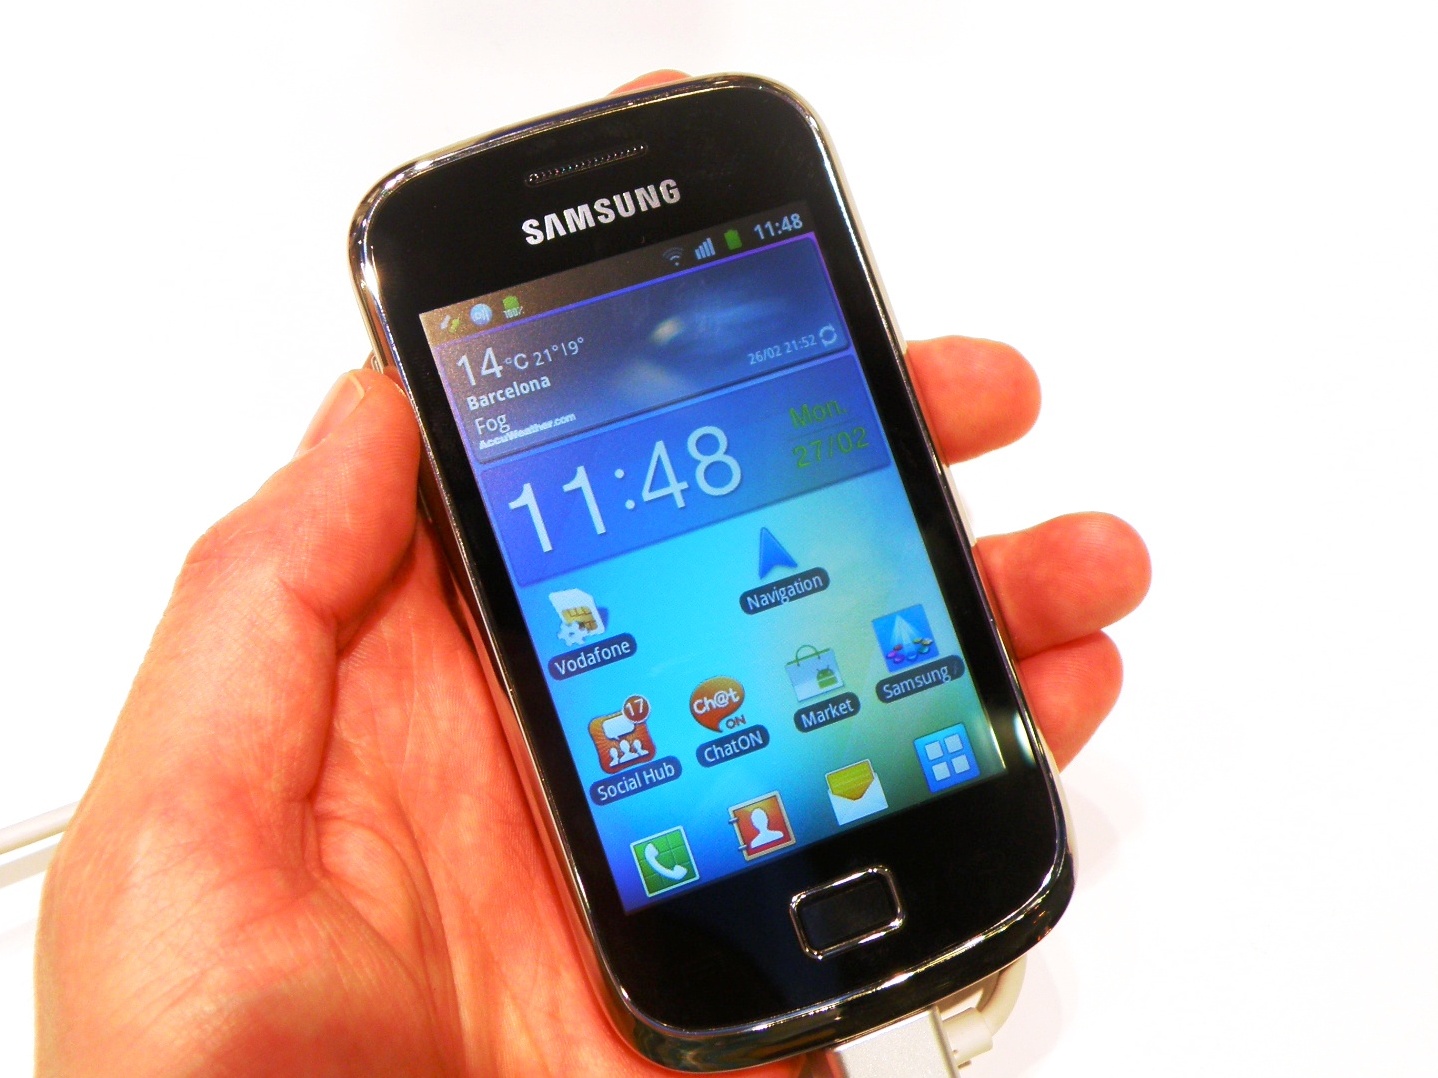 Samsung Galaxy s2 Mini